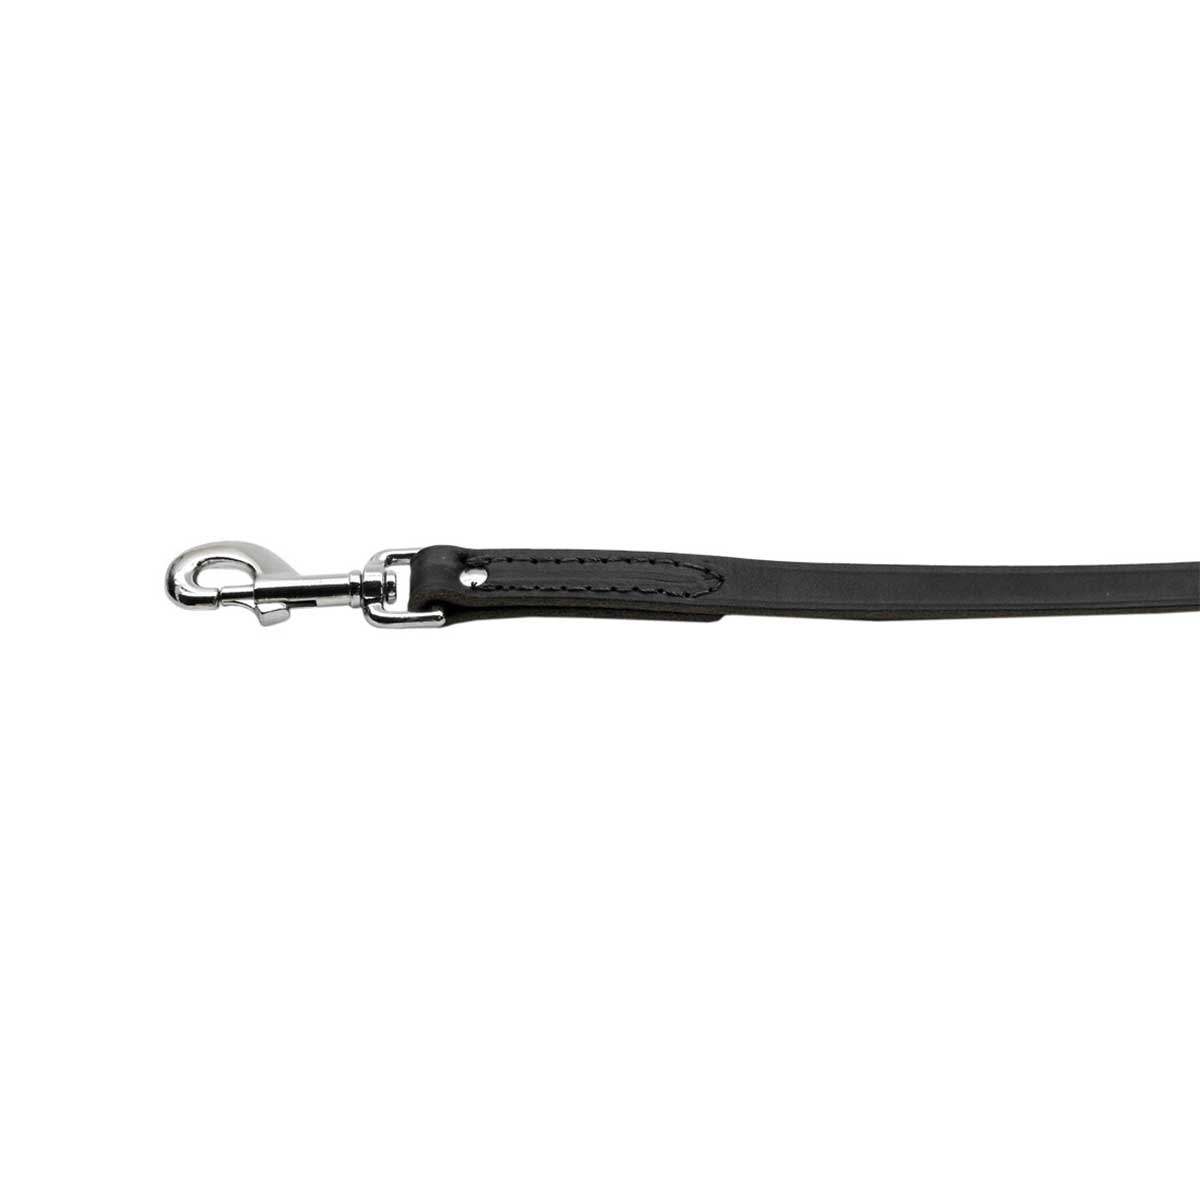 Plain Leather Leash in Black 6 ft | Pawlicious & Company